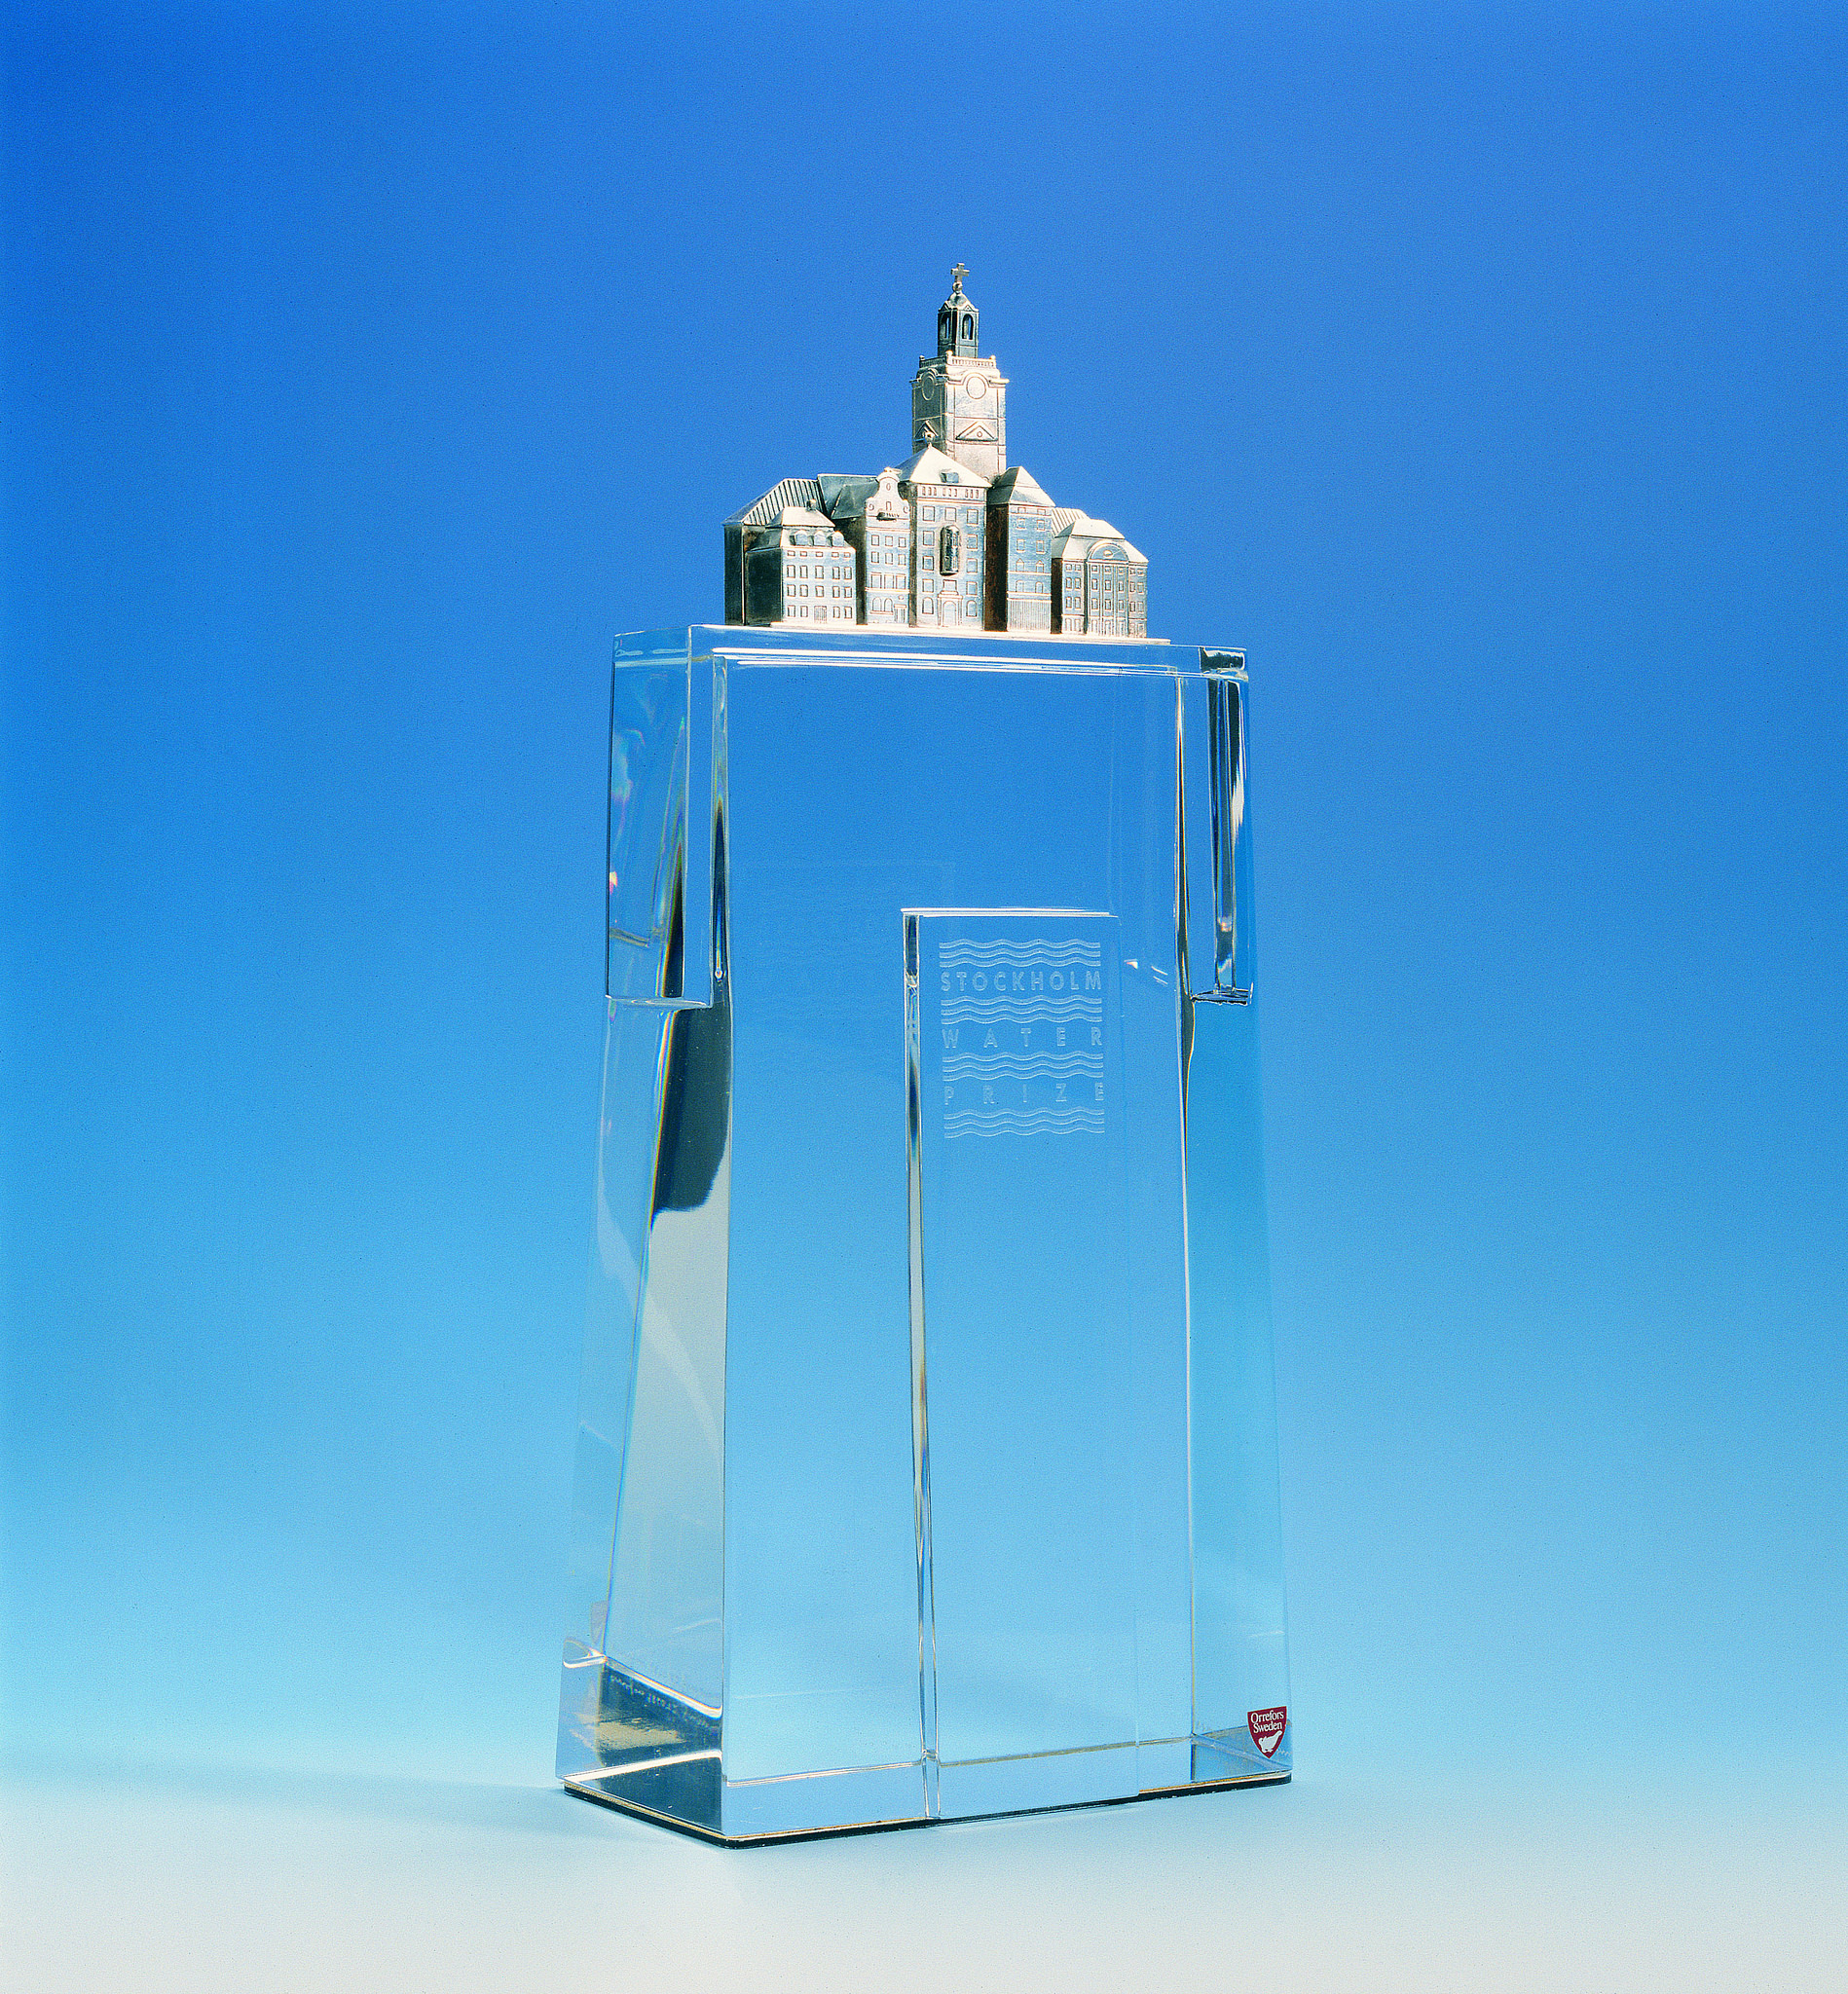 2008 Stockholm Water Prize sculpture (worldwaterweek/Flickr/CC BY 2.0)